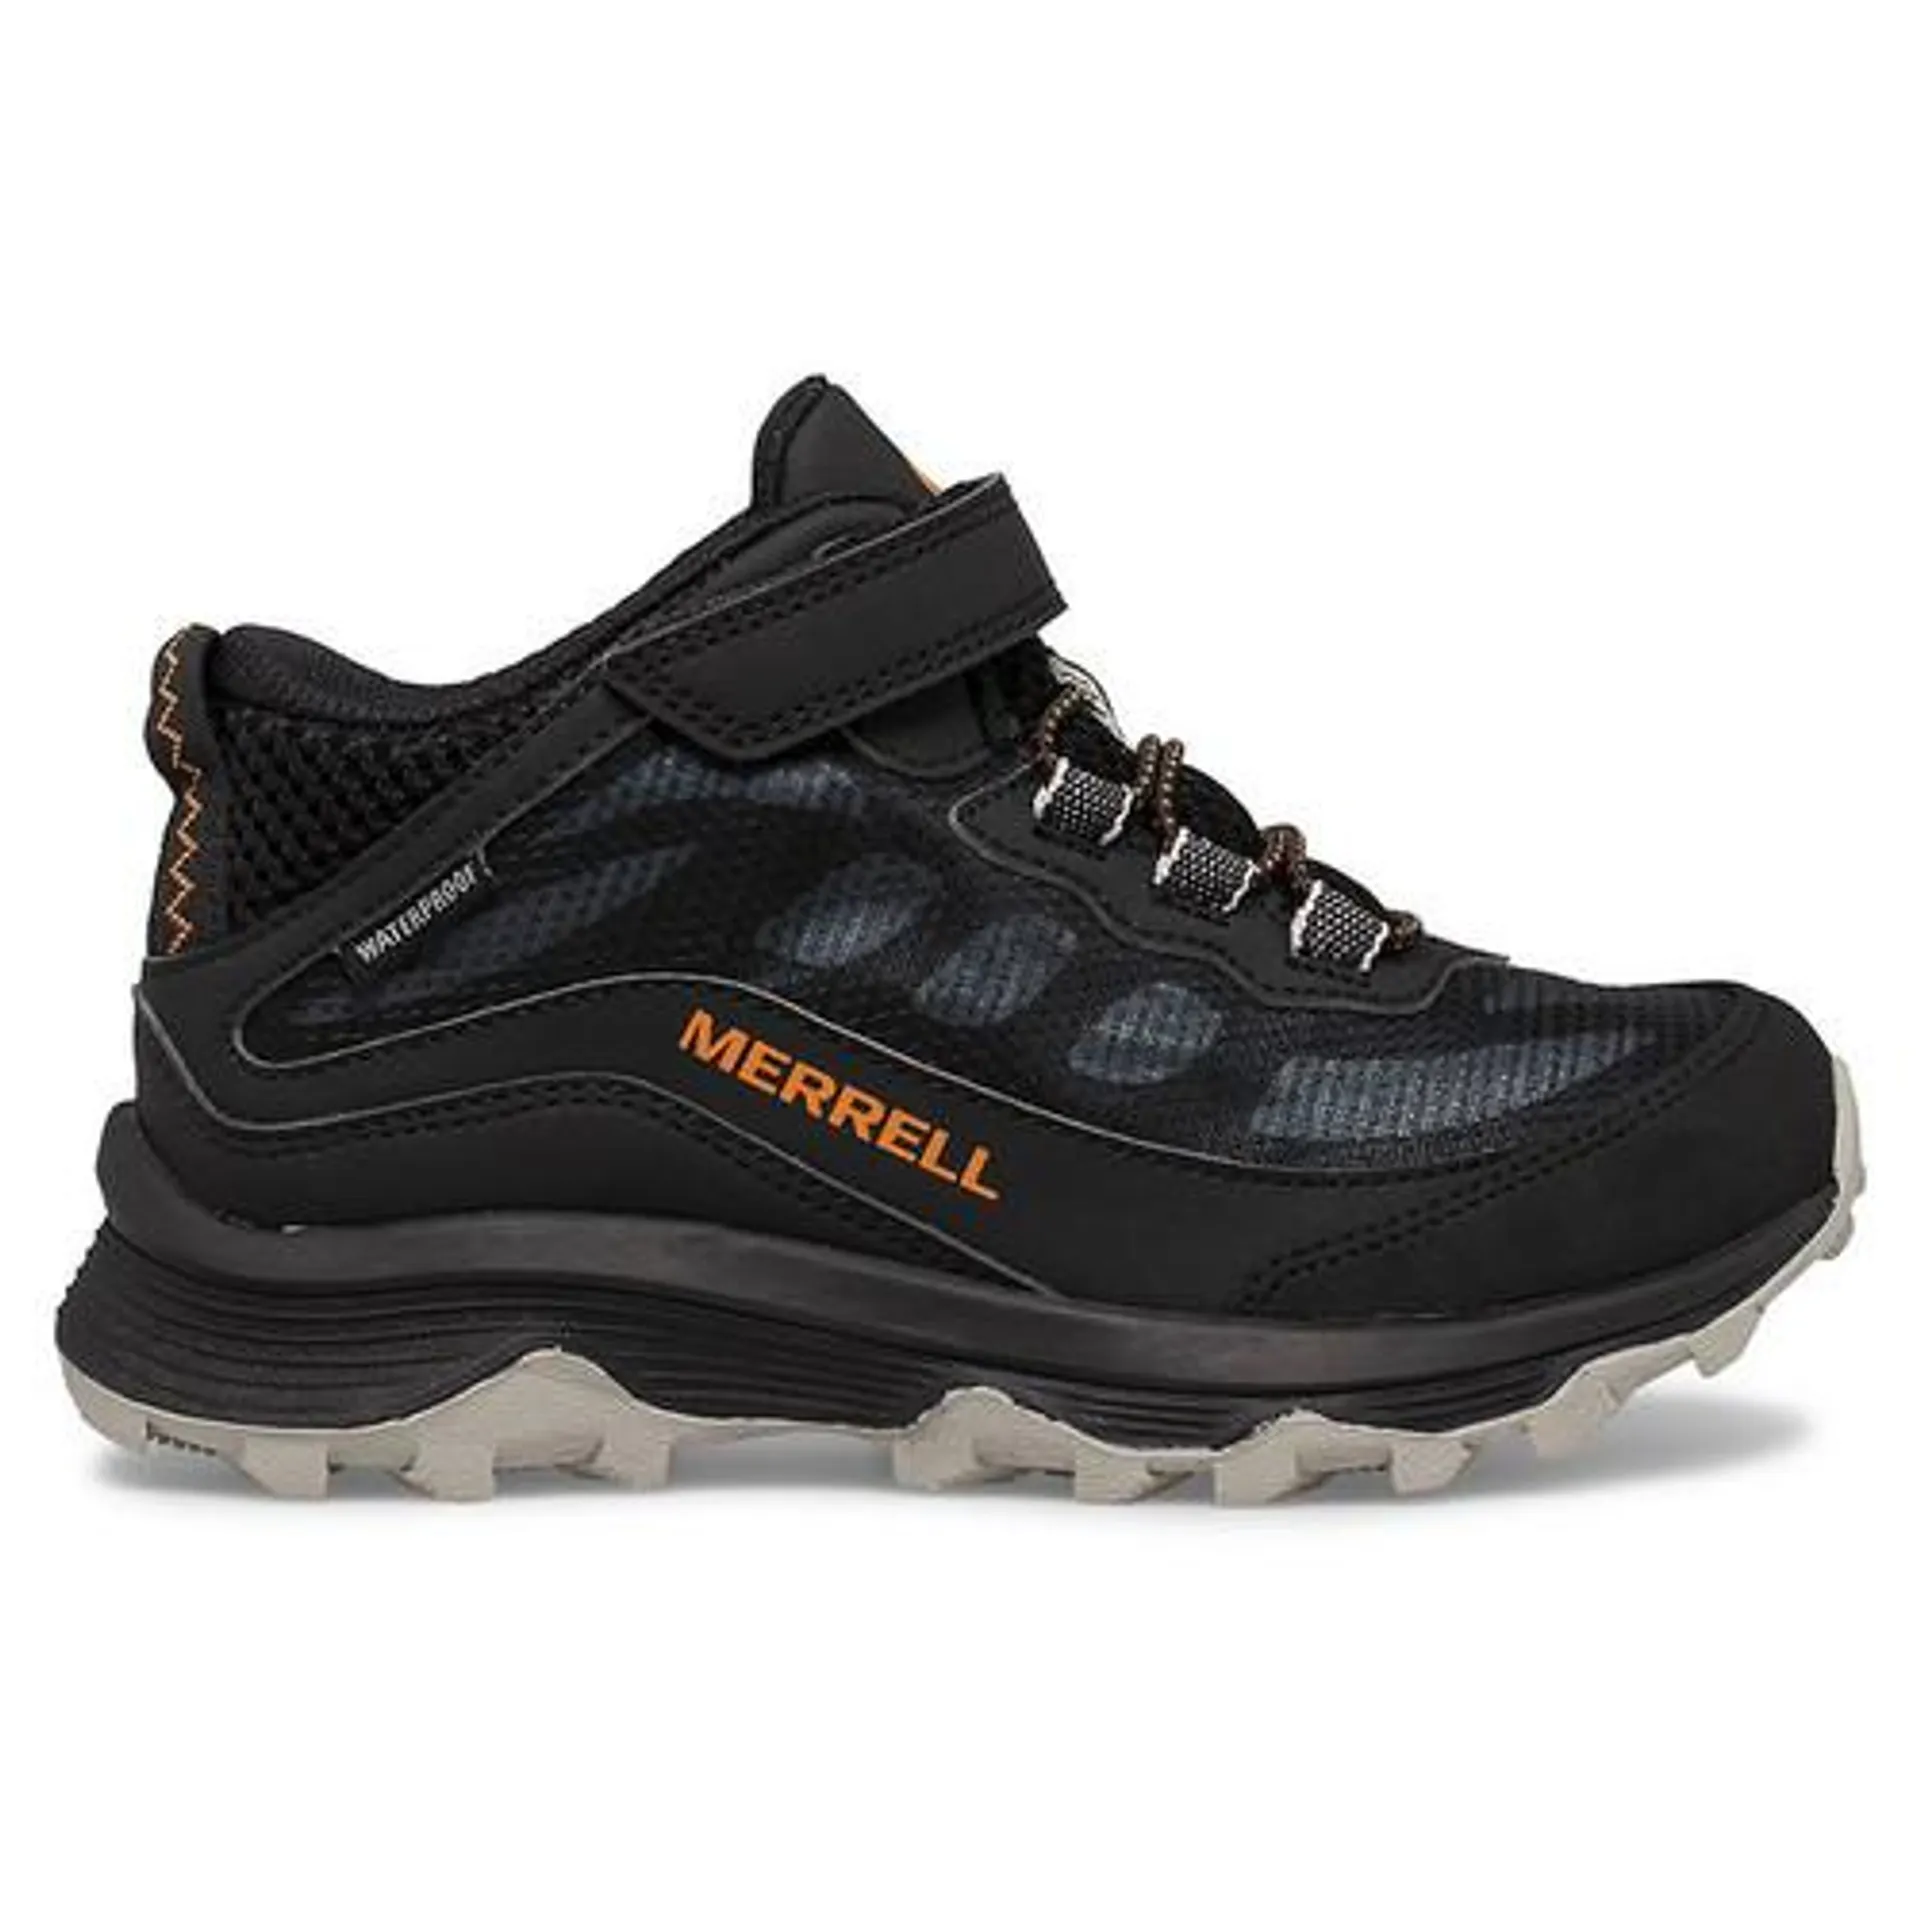 Merrell Moab Speed Mid Walking Boots